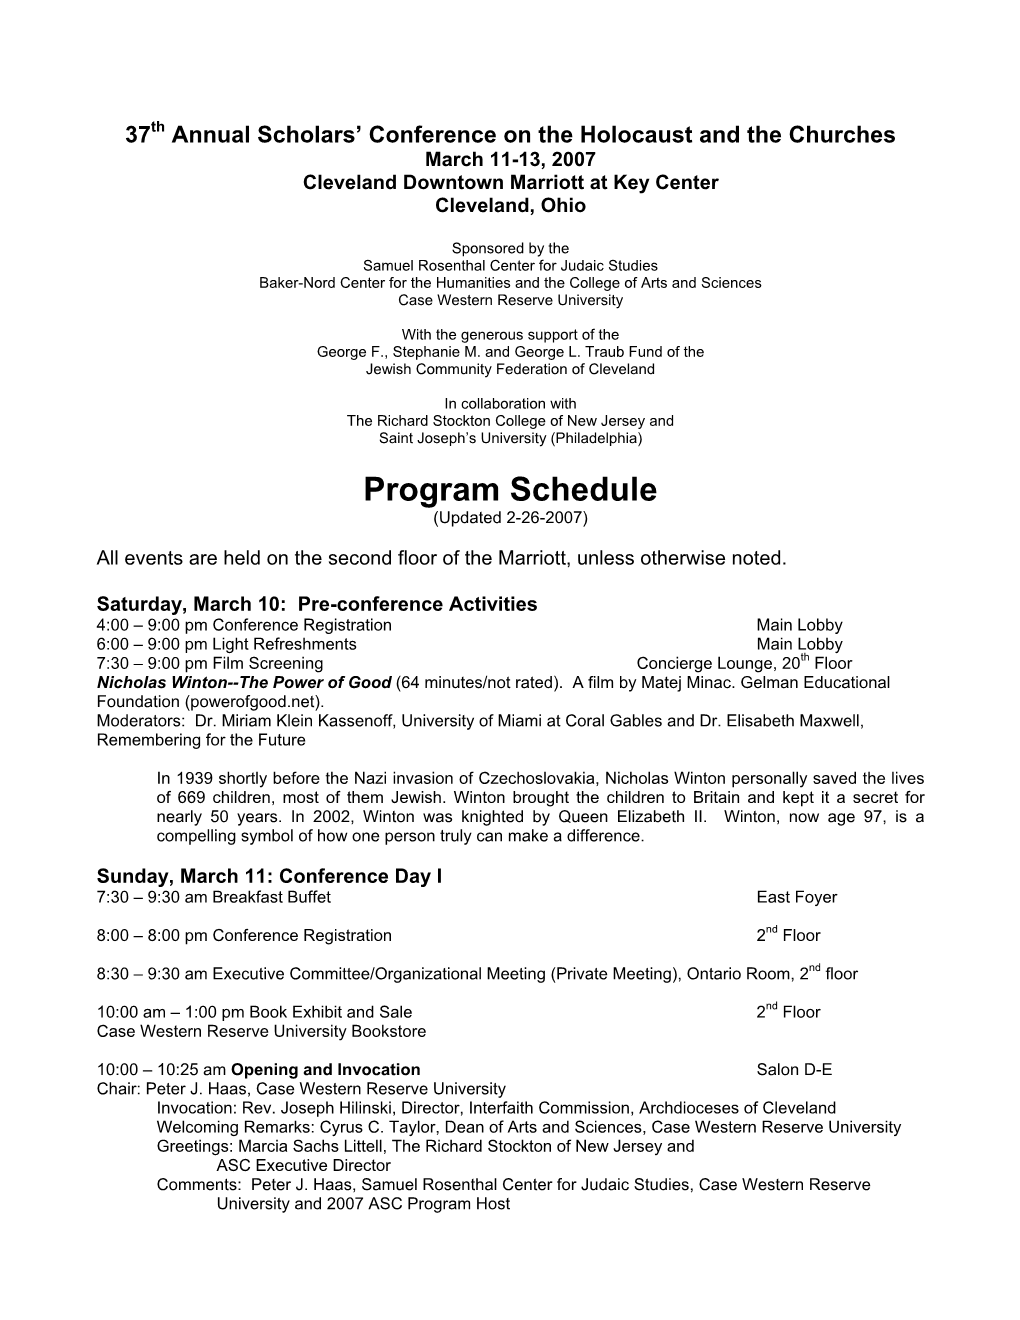 Program Schedule (Updated 2-26-2007)